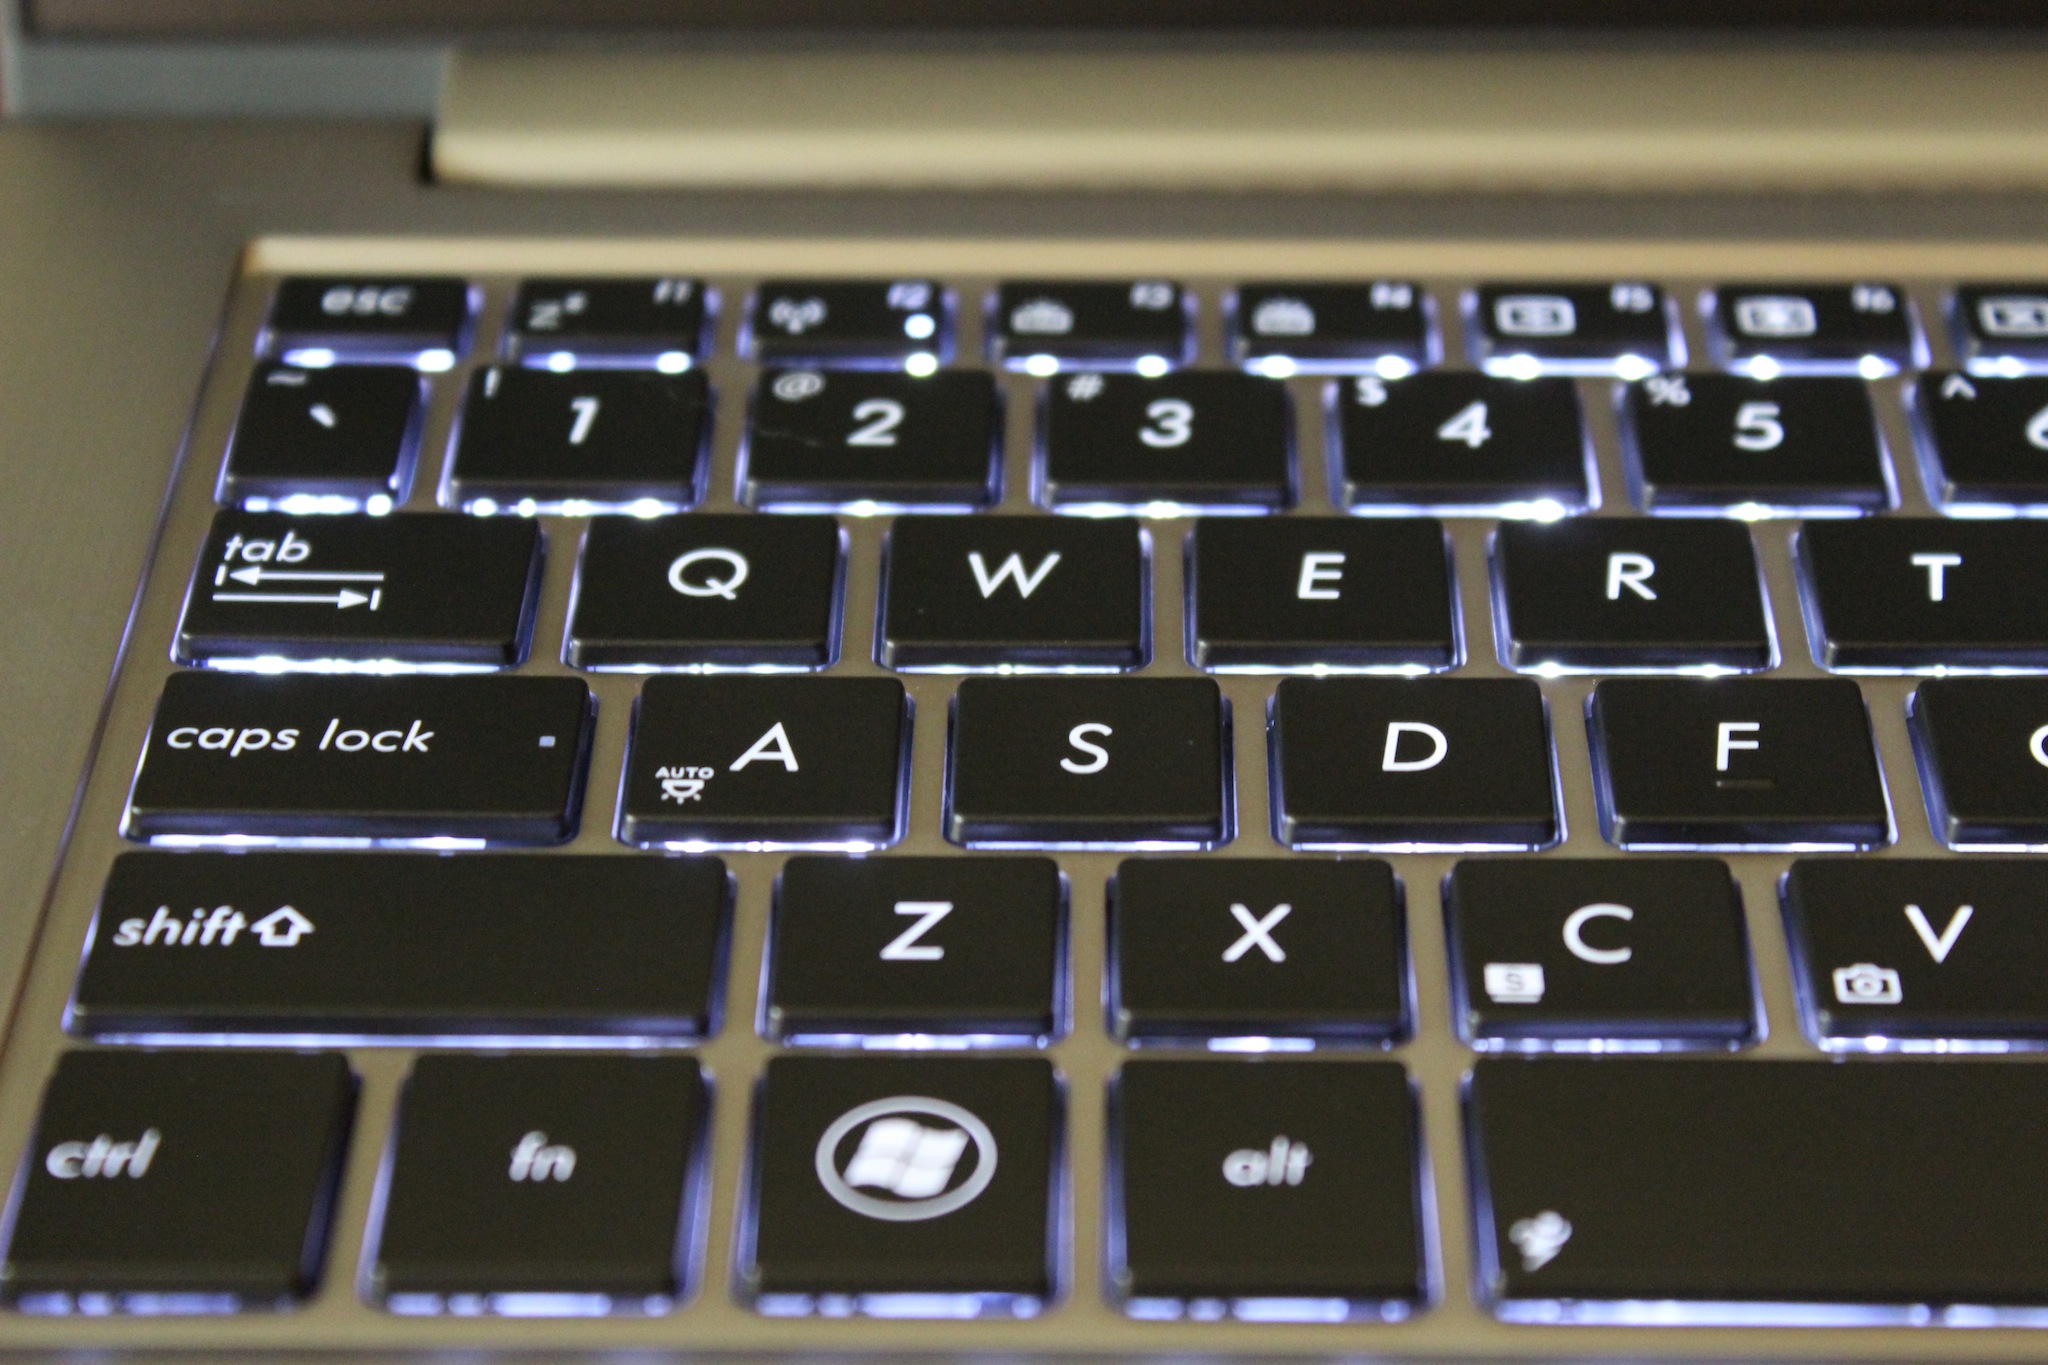 asus keyboard backlight settings